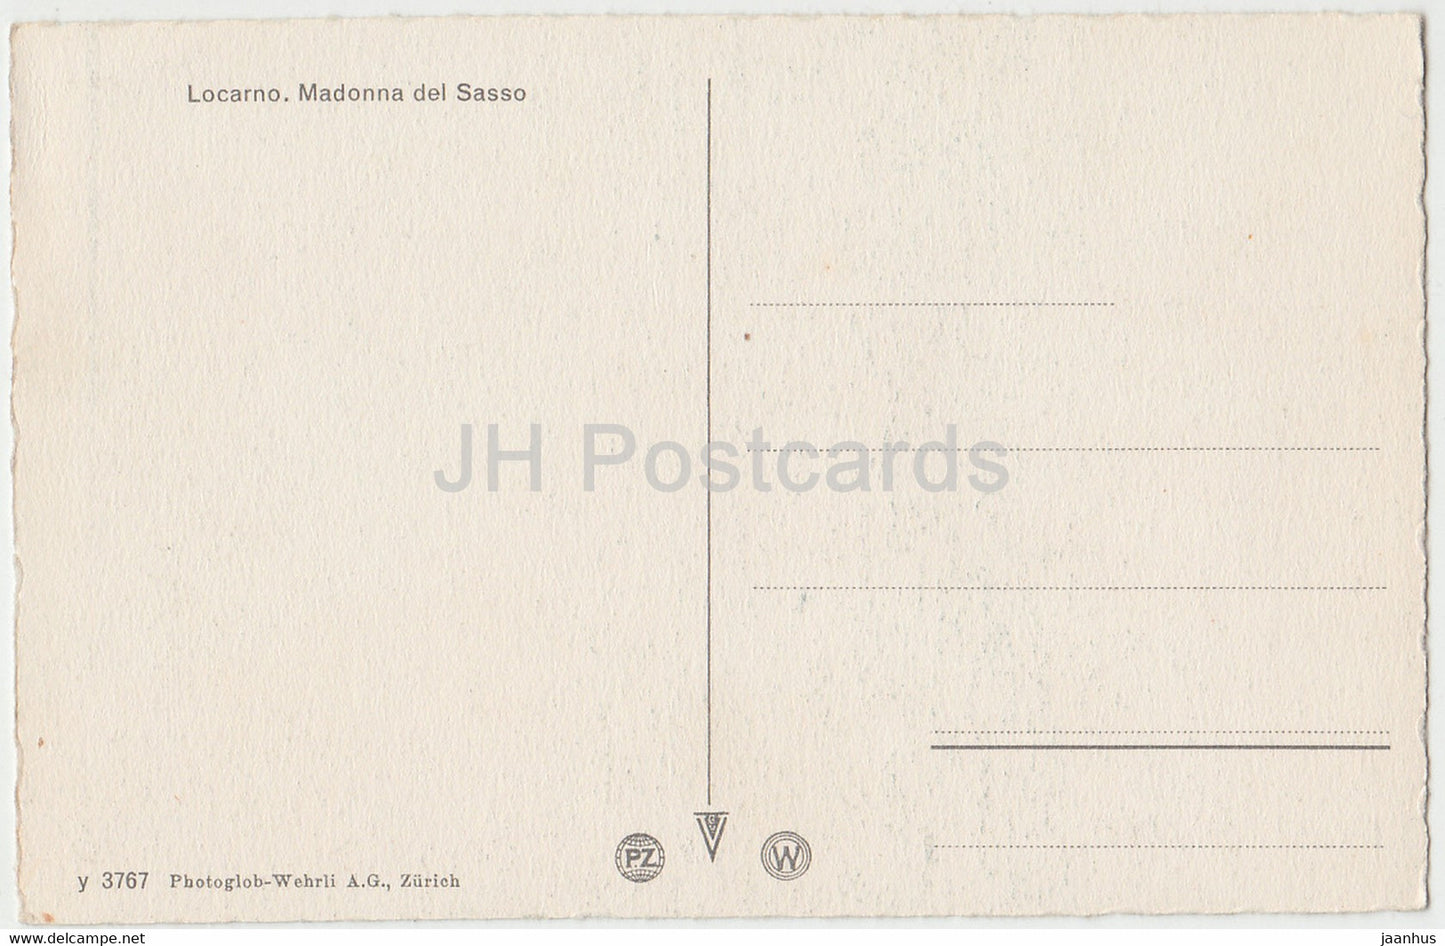 Locarno - Madonna del Sasso - 3767 - carte postale ancienne - Suisse - inutilisée